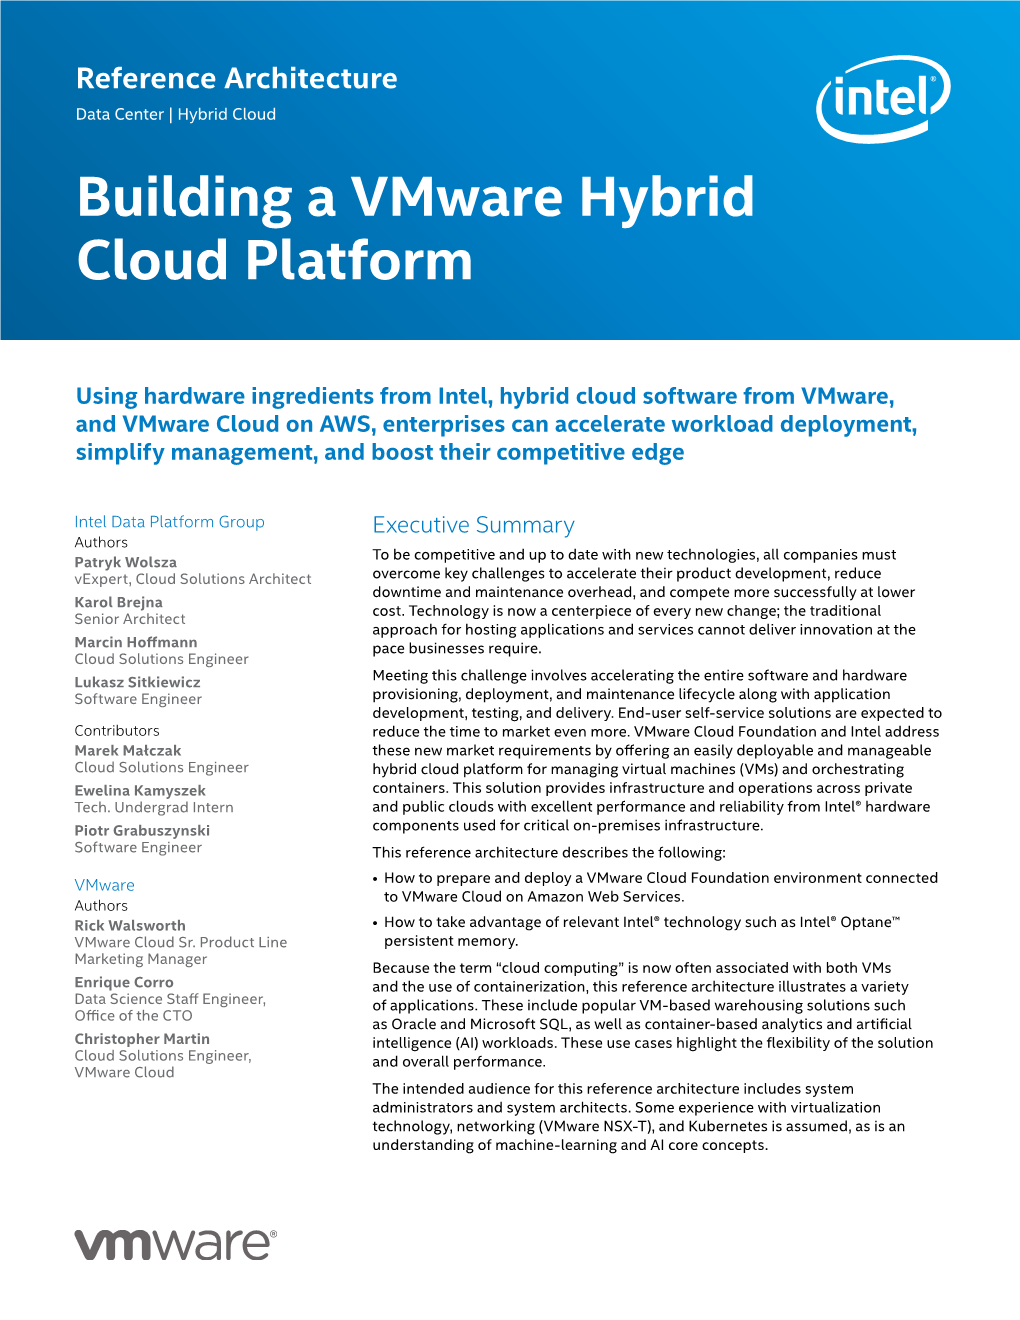 Building a Vmware Hybrid Cloud Platform